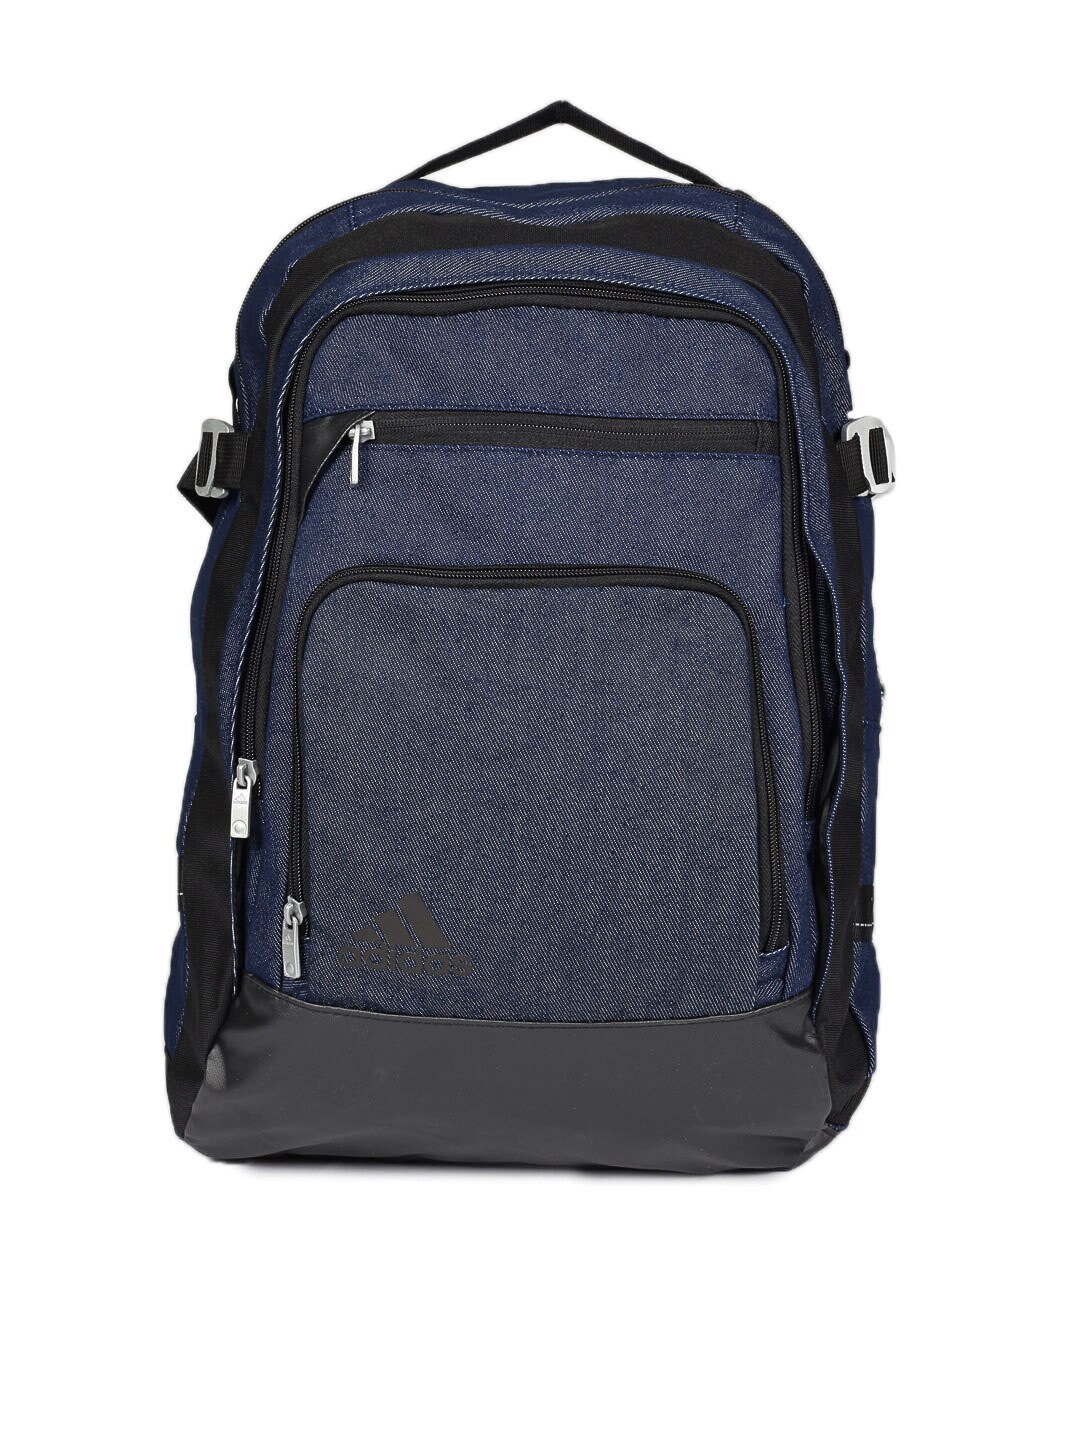 ADIDAS Unisex Blue Jeans Backpack